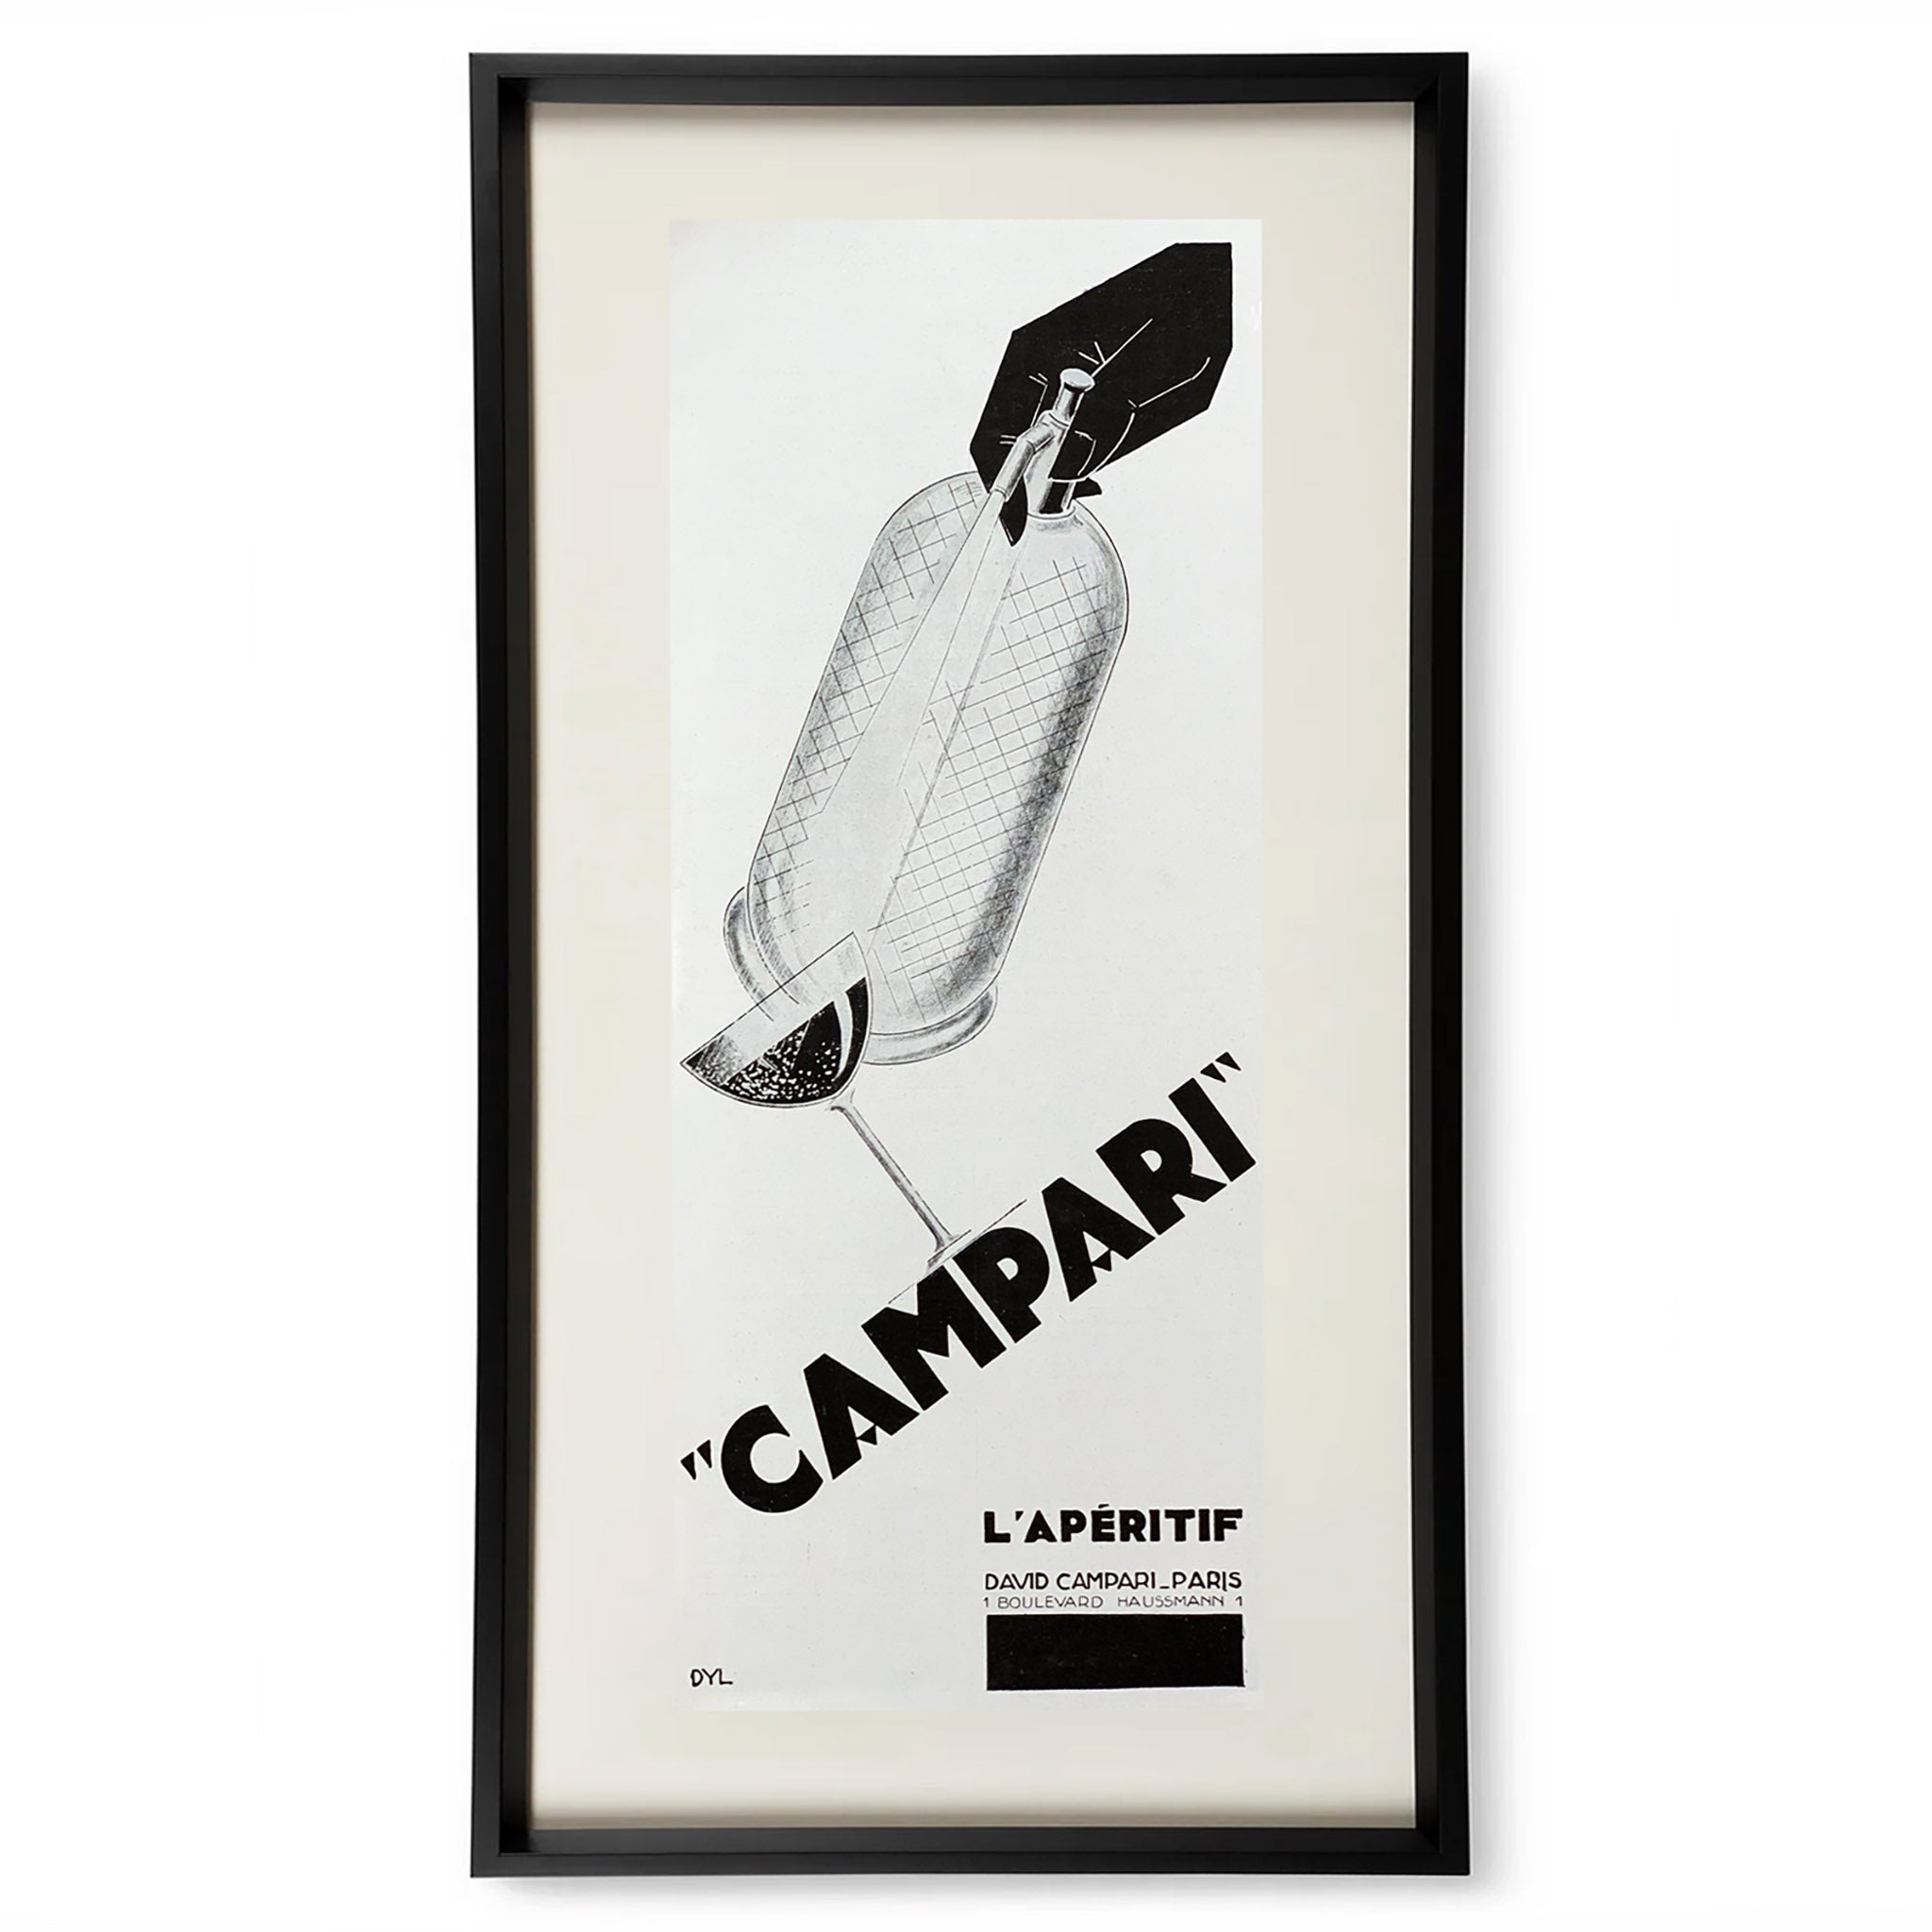 Framed Art Deco Campari Aperitif Print Advertisement